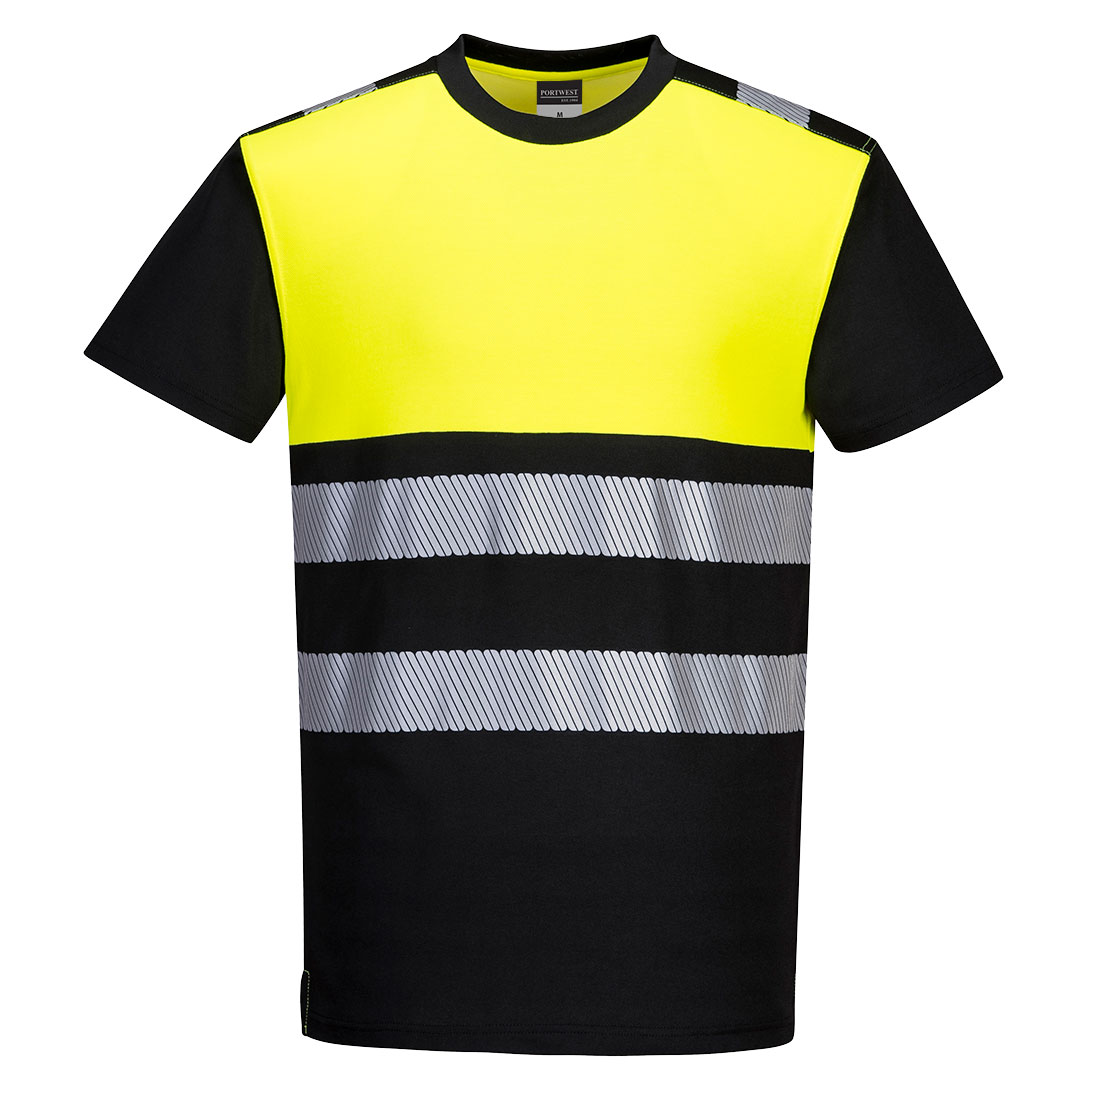 PW3 Hi-Vis Class 1 T-Shirt - Black/Yellow